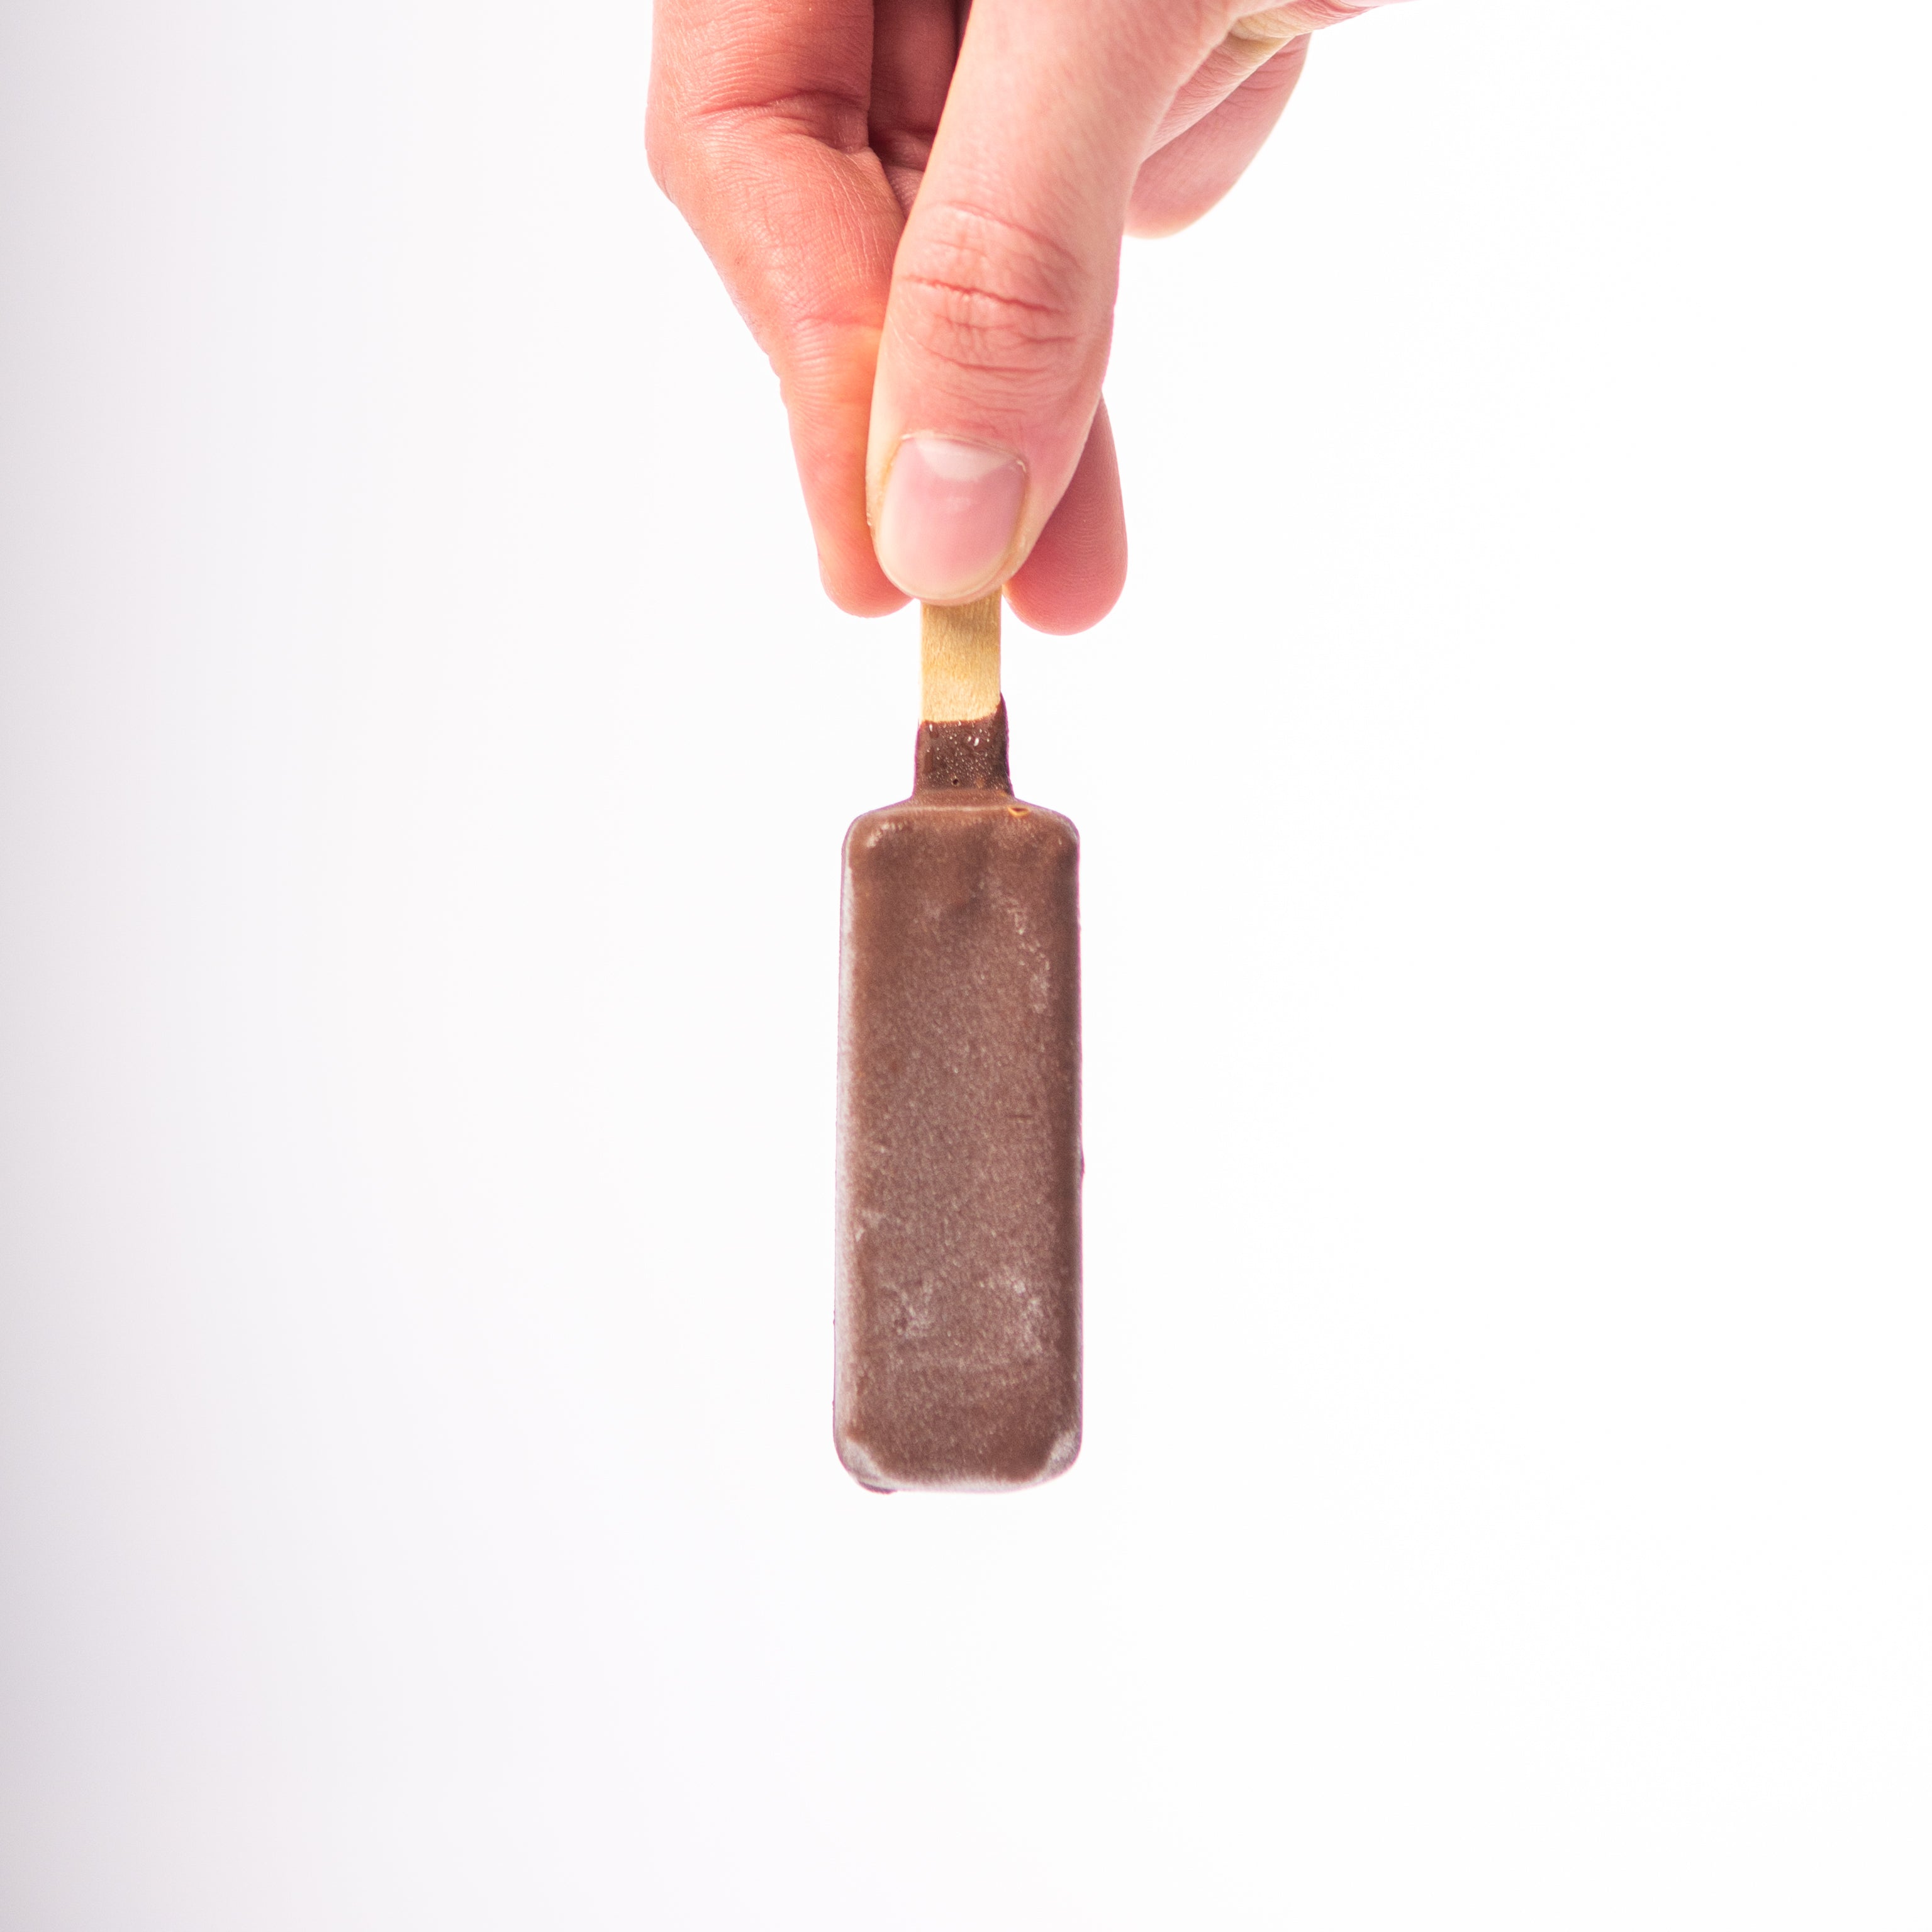 Mini Frisco framboossorbet omhuld met fondant chocolade - 80st